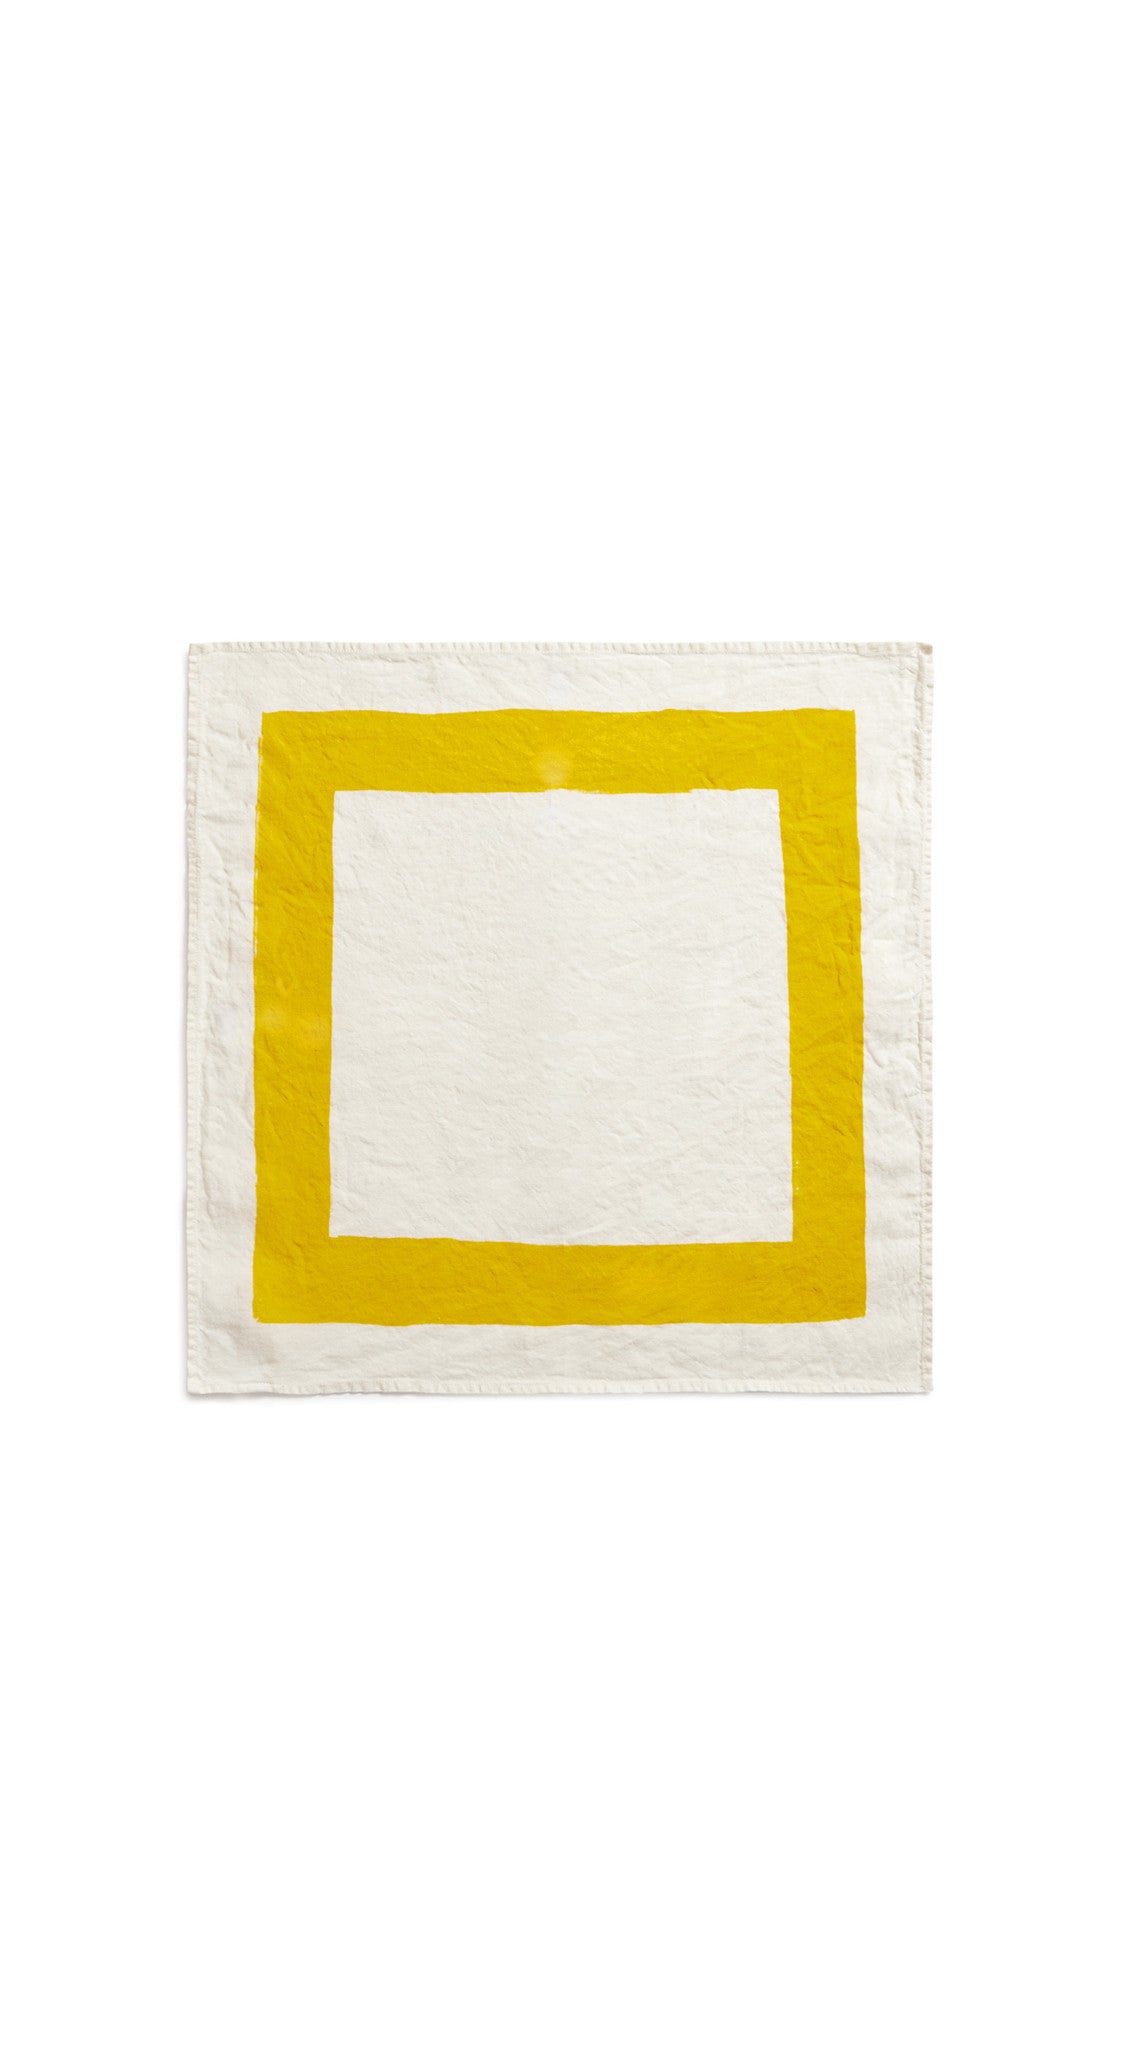 Cornice Linen Napkin in Lemon Yellow, 50x50cm